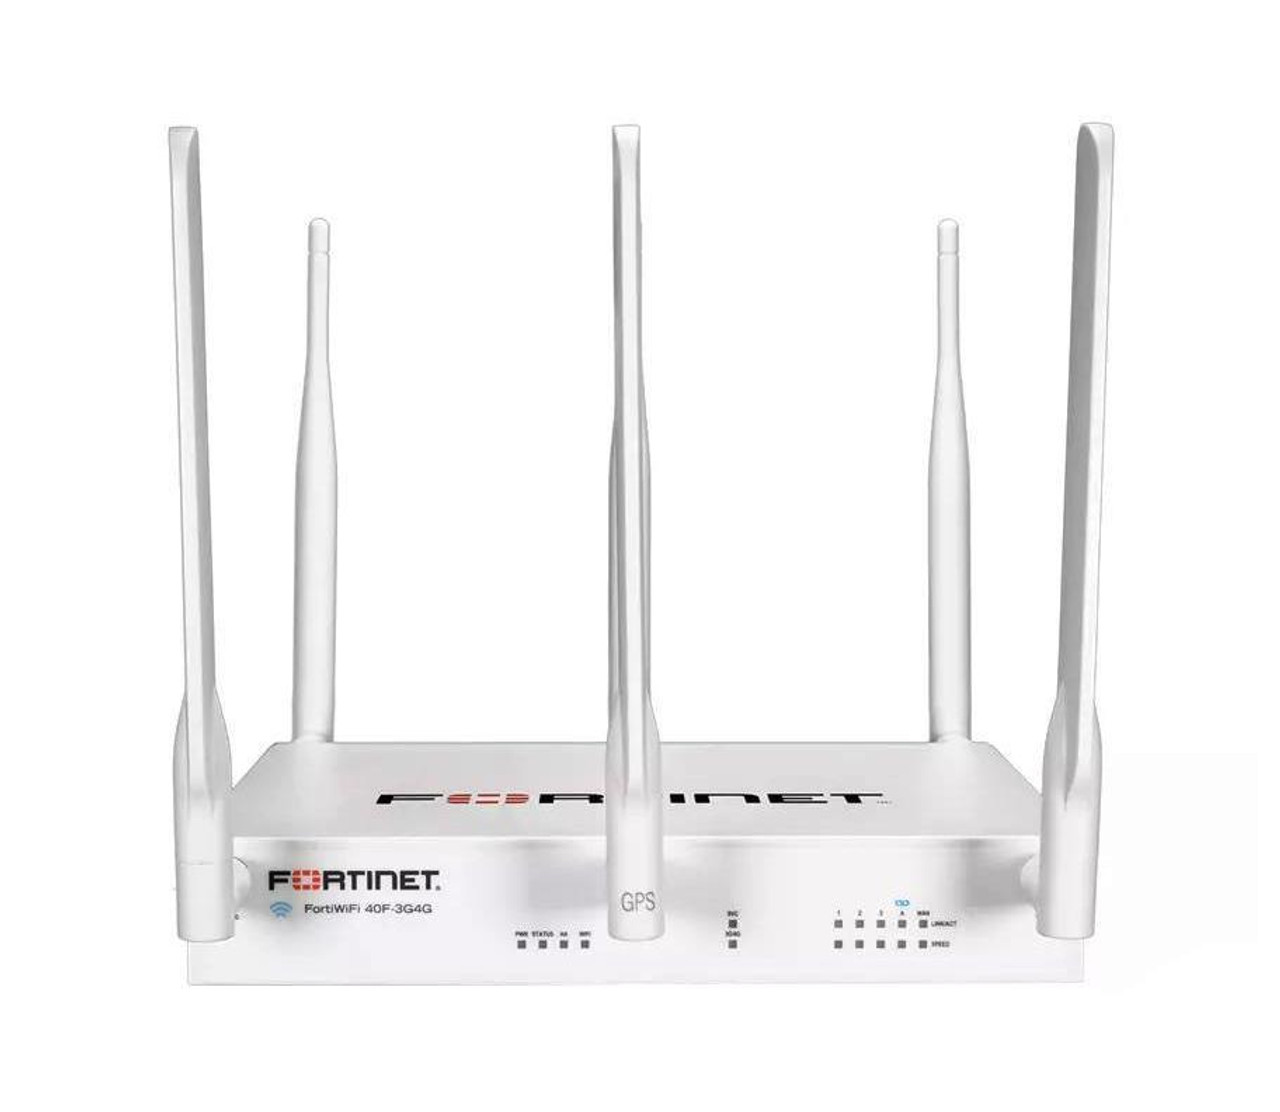 Fortinet FortiWifi FWF-40F-3G4G Network Security/Firewall Appliance - 5 Port - 10/100/1000Base-T - Gigabit Ethernet - Wireless LAN IEEE 802.11